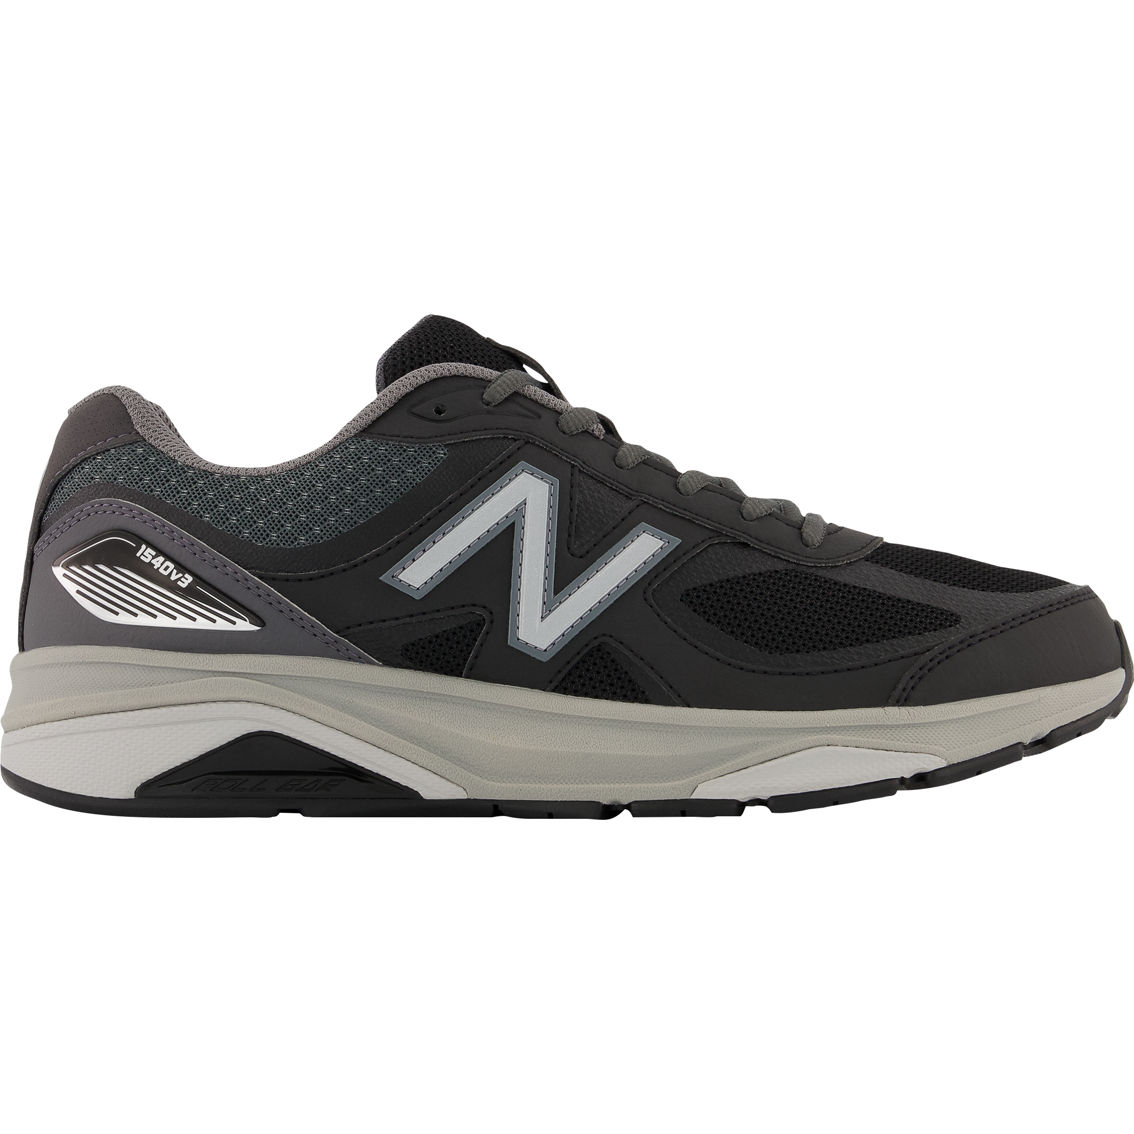 New Balance Men's 1540v3 Running Shoes - Image 2 of 4